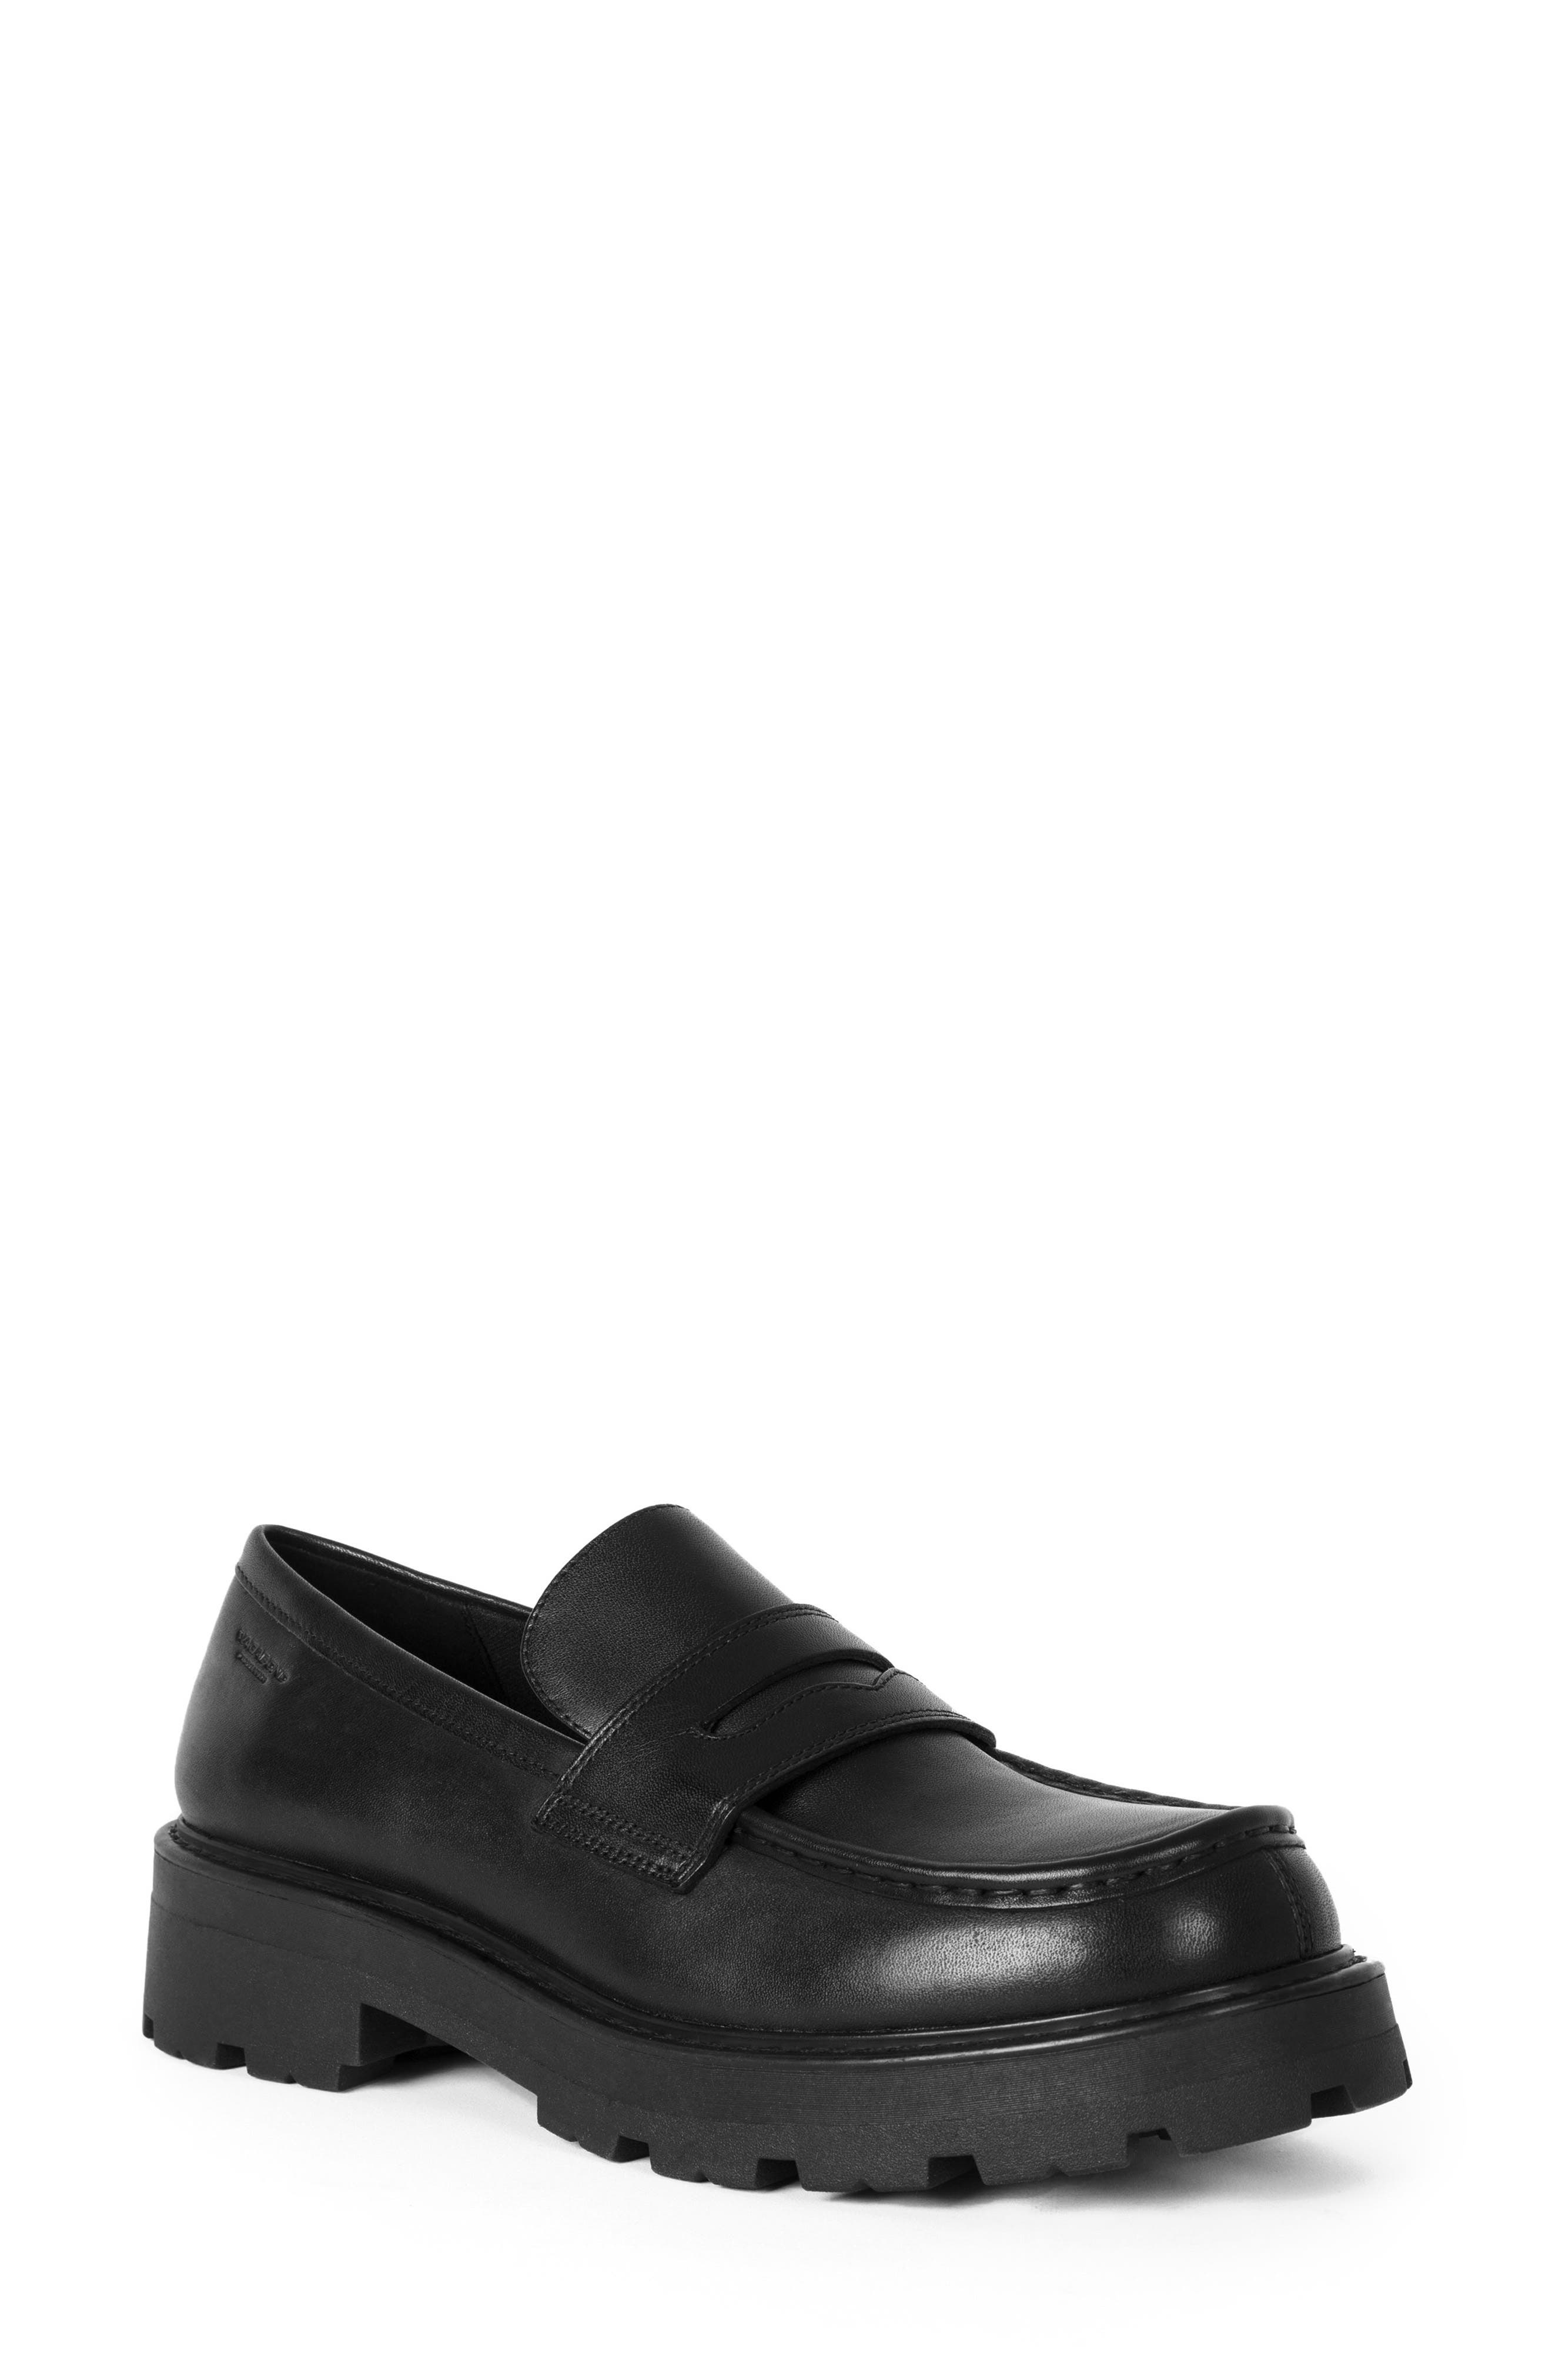 Vagabond Women's Ines Leather Heeled Sandals - Black